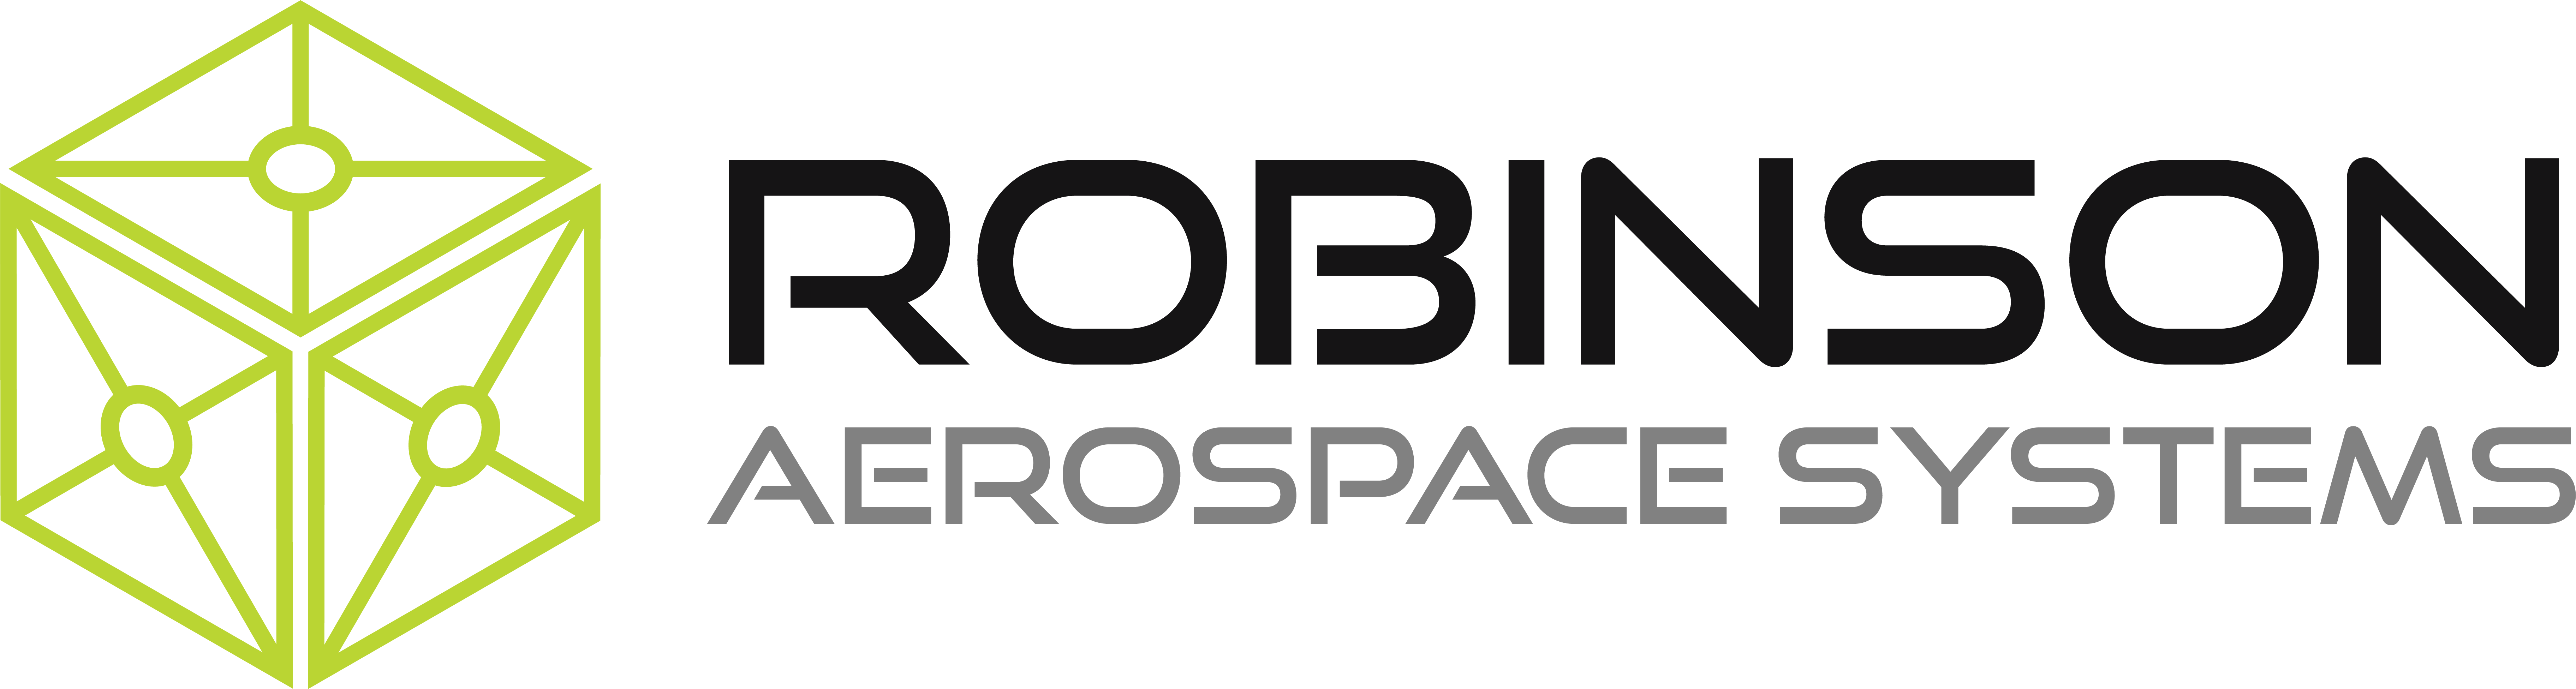 Robinson_Aerospace_Logo_Black.png